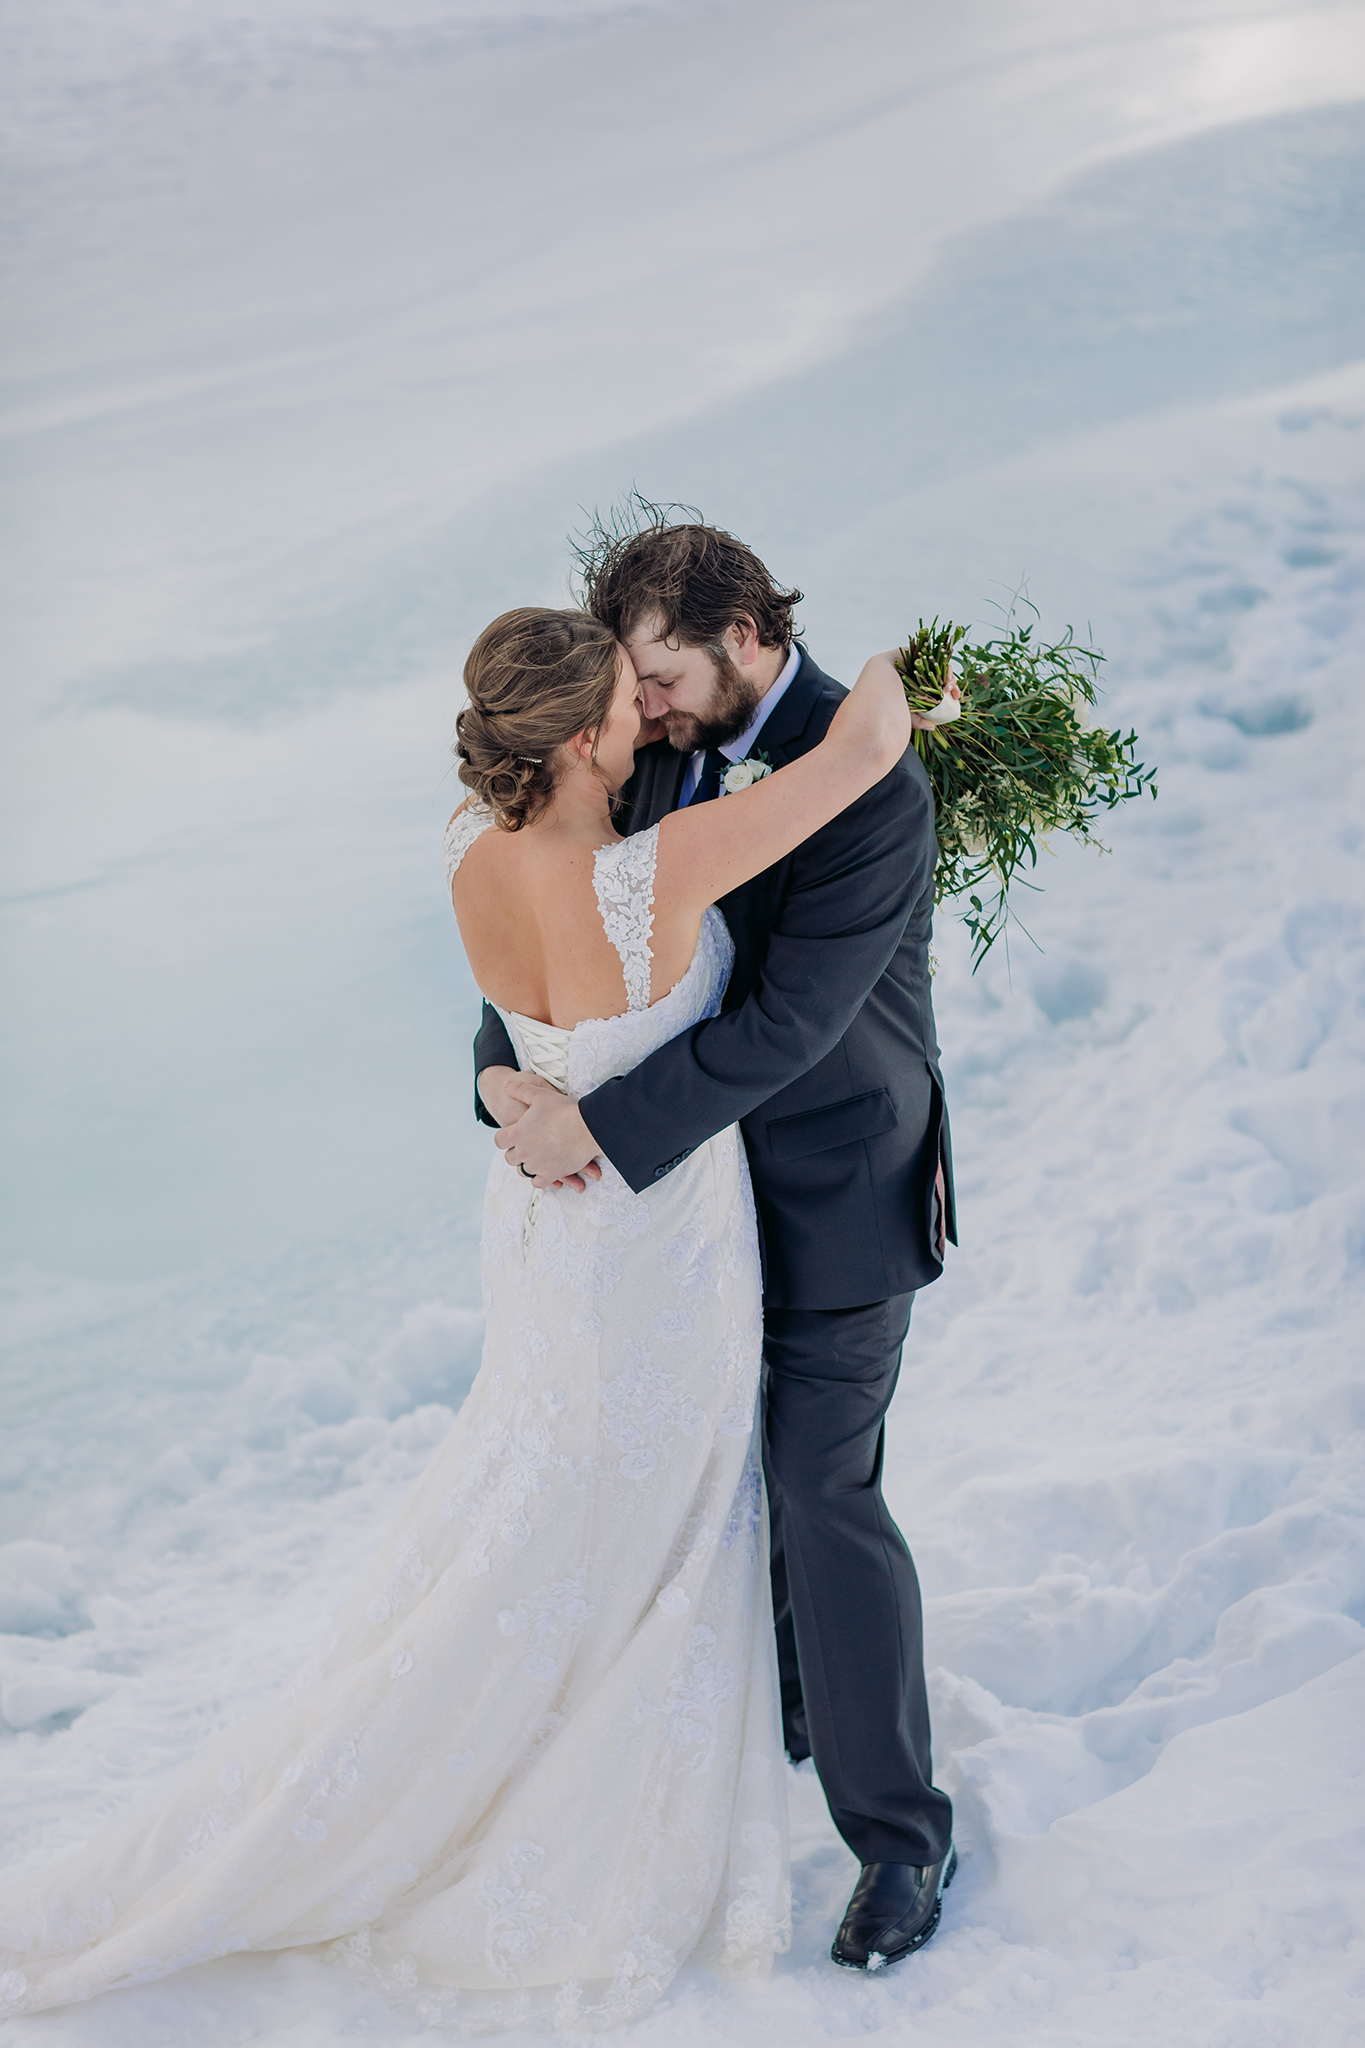 Lake Minnewanka bride & groom portraits Winter mountain wedding photos by Banff Wedding Photographer ENV Photography